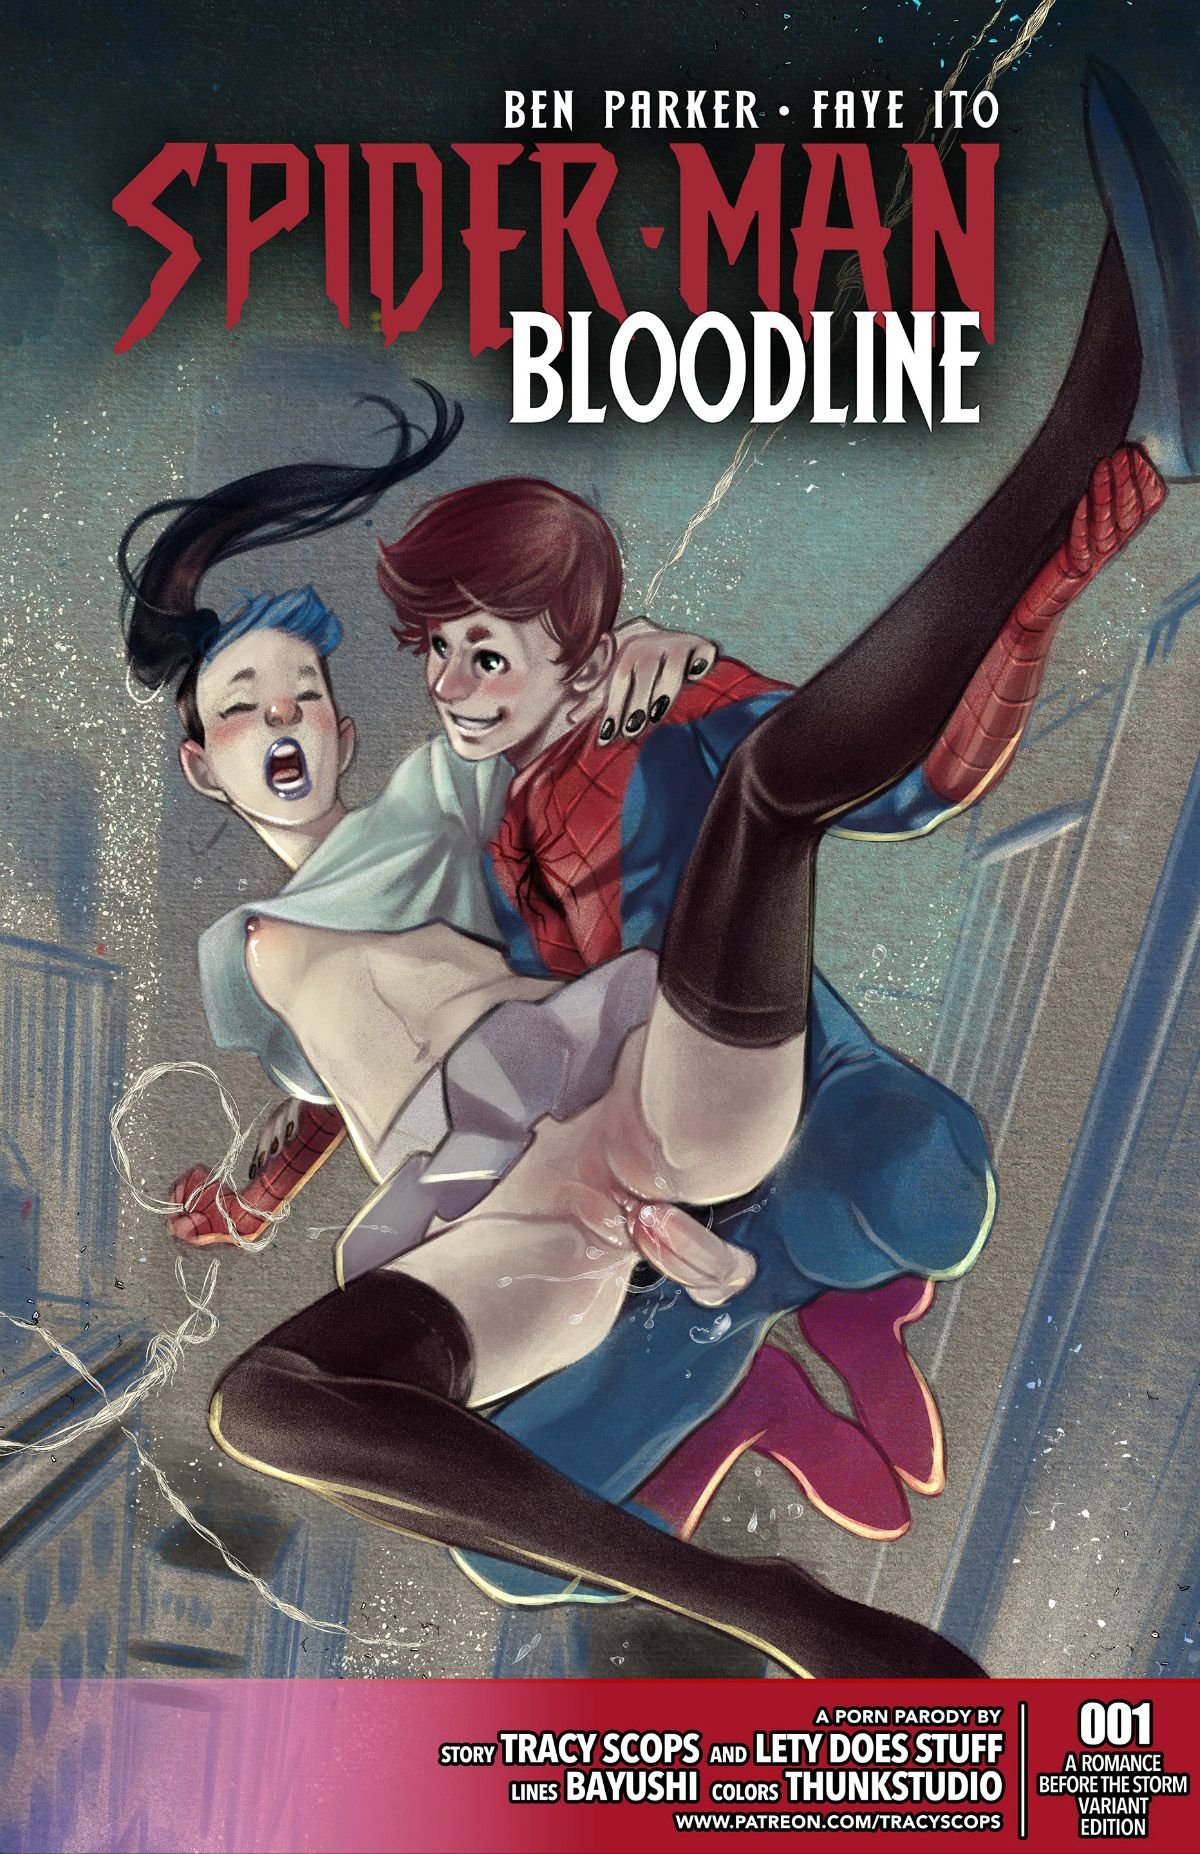 Bloodline (Spider-Man) [Tracy Scops] Porn Comic | AllPornComic